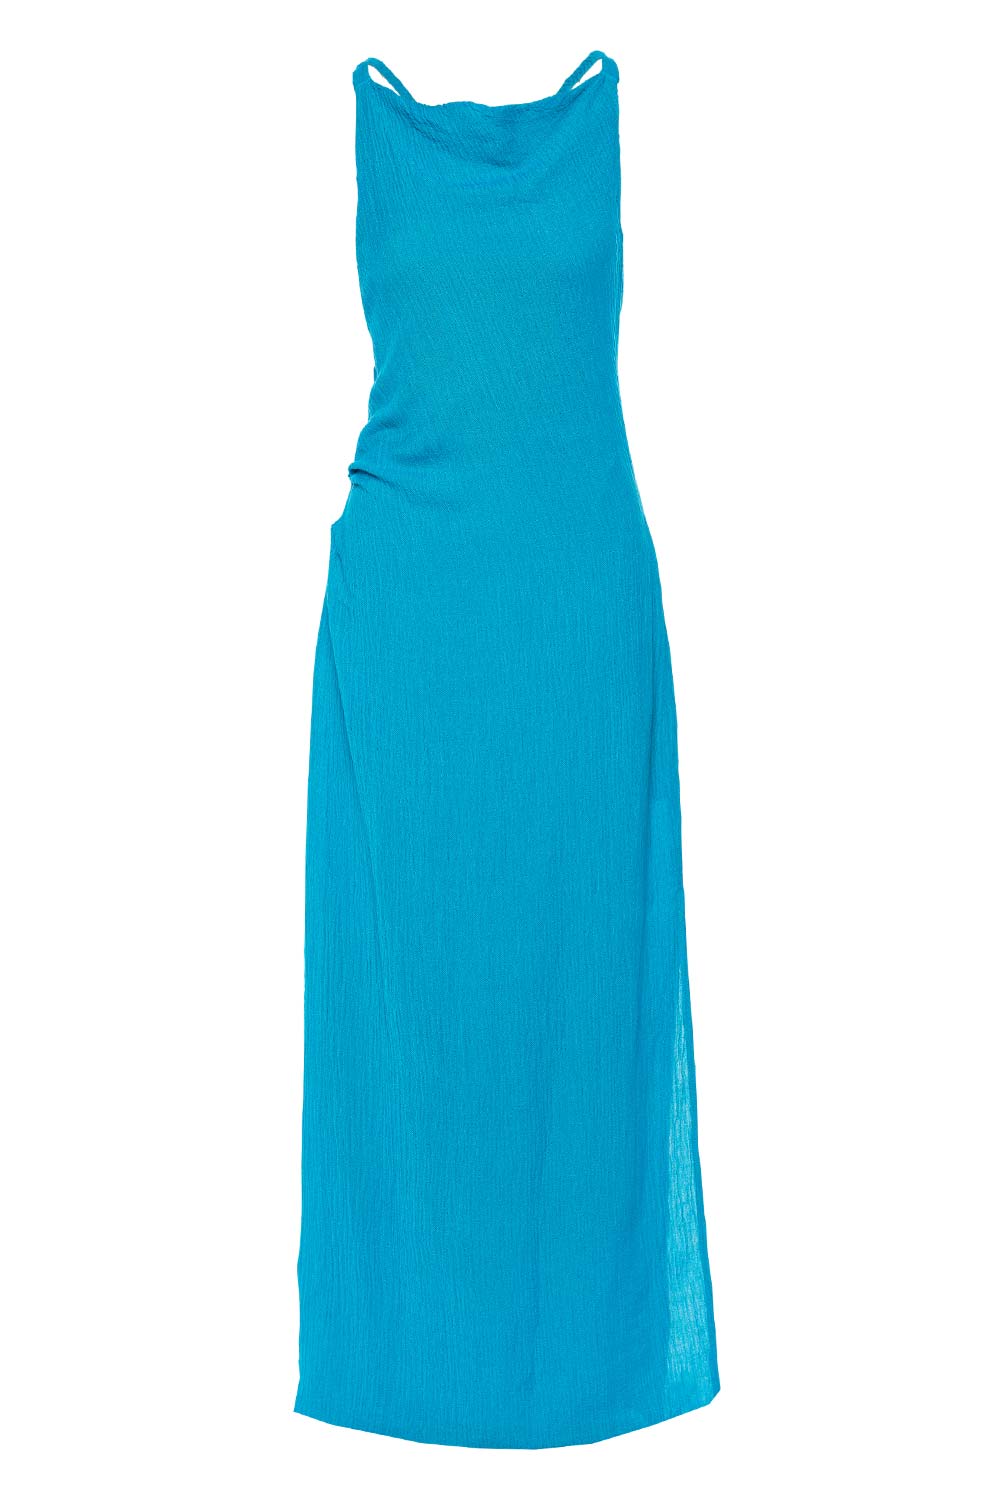 Faithfull The Brand Palmera Turquoise Knit Maxi Dress